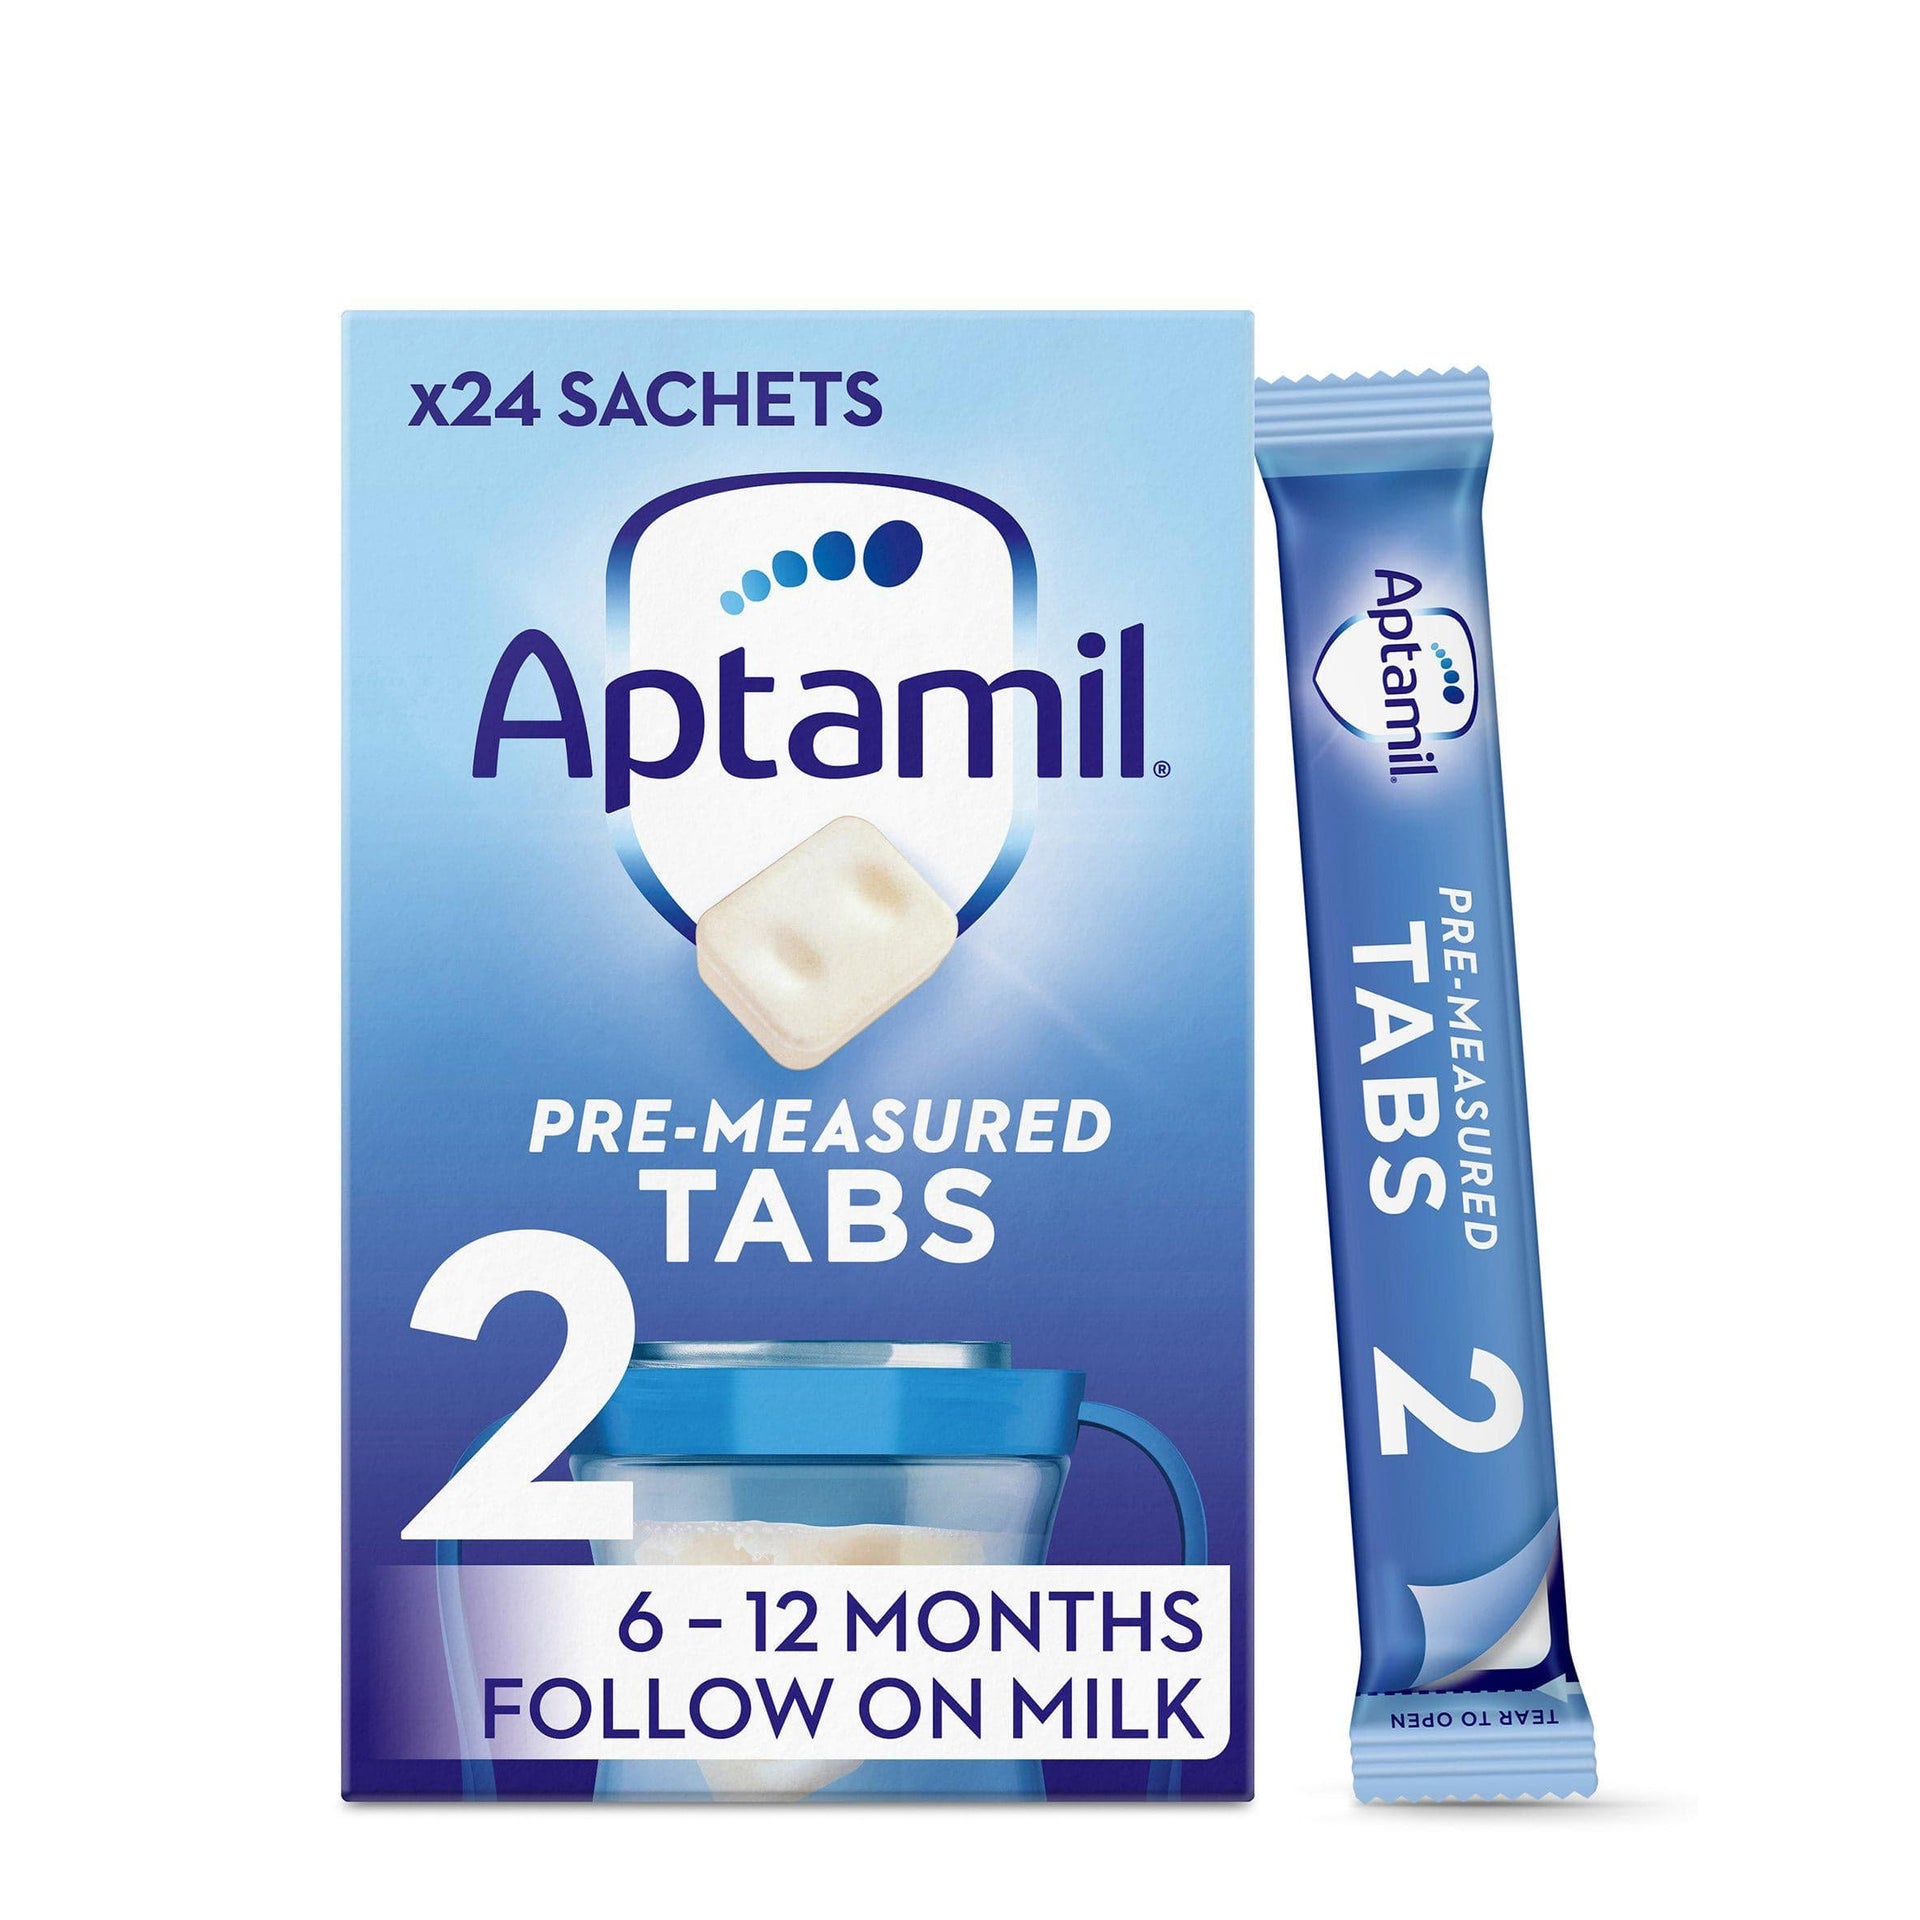 Aptamil Tabs 2 Pre-Measured Follow on Milk: Convenient Nutrition – 4 My Tots